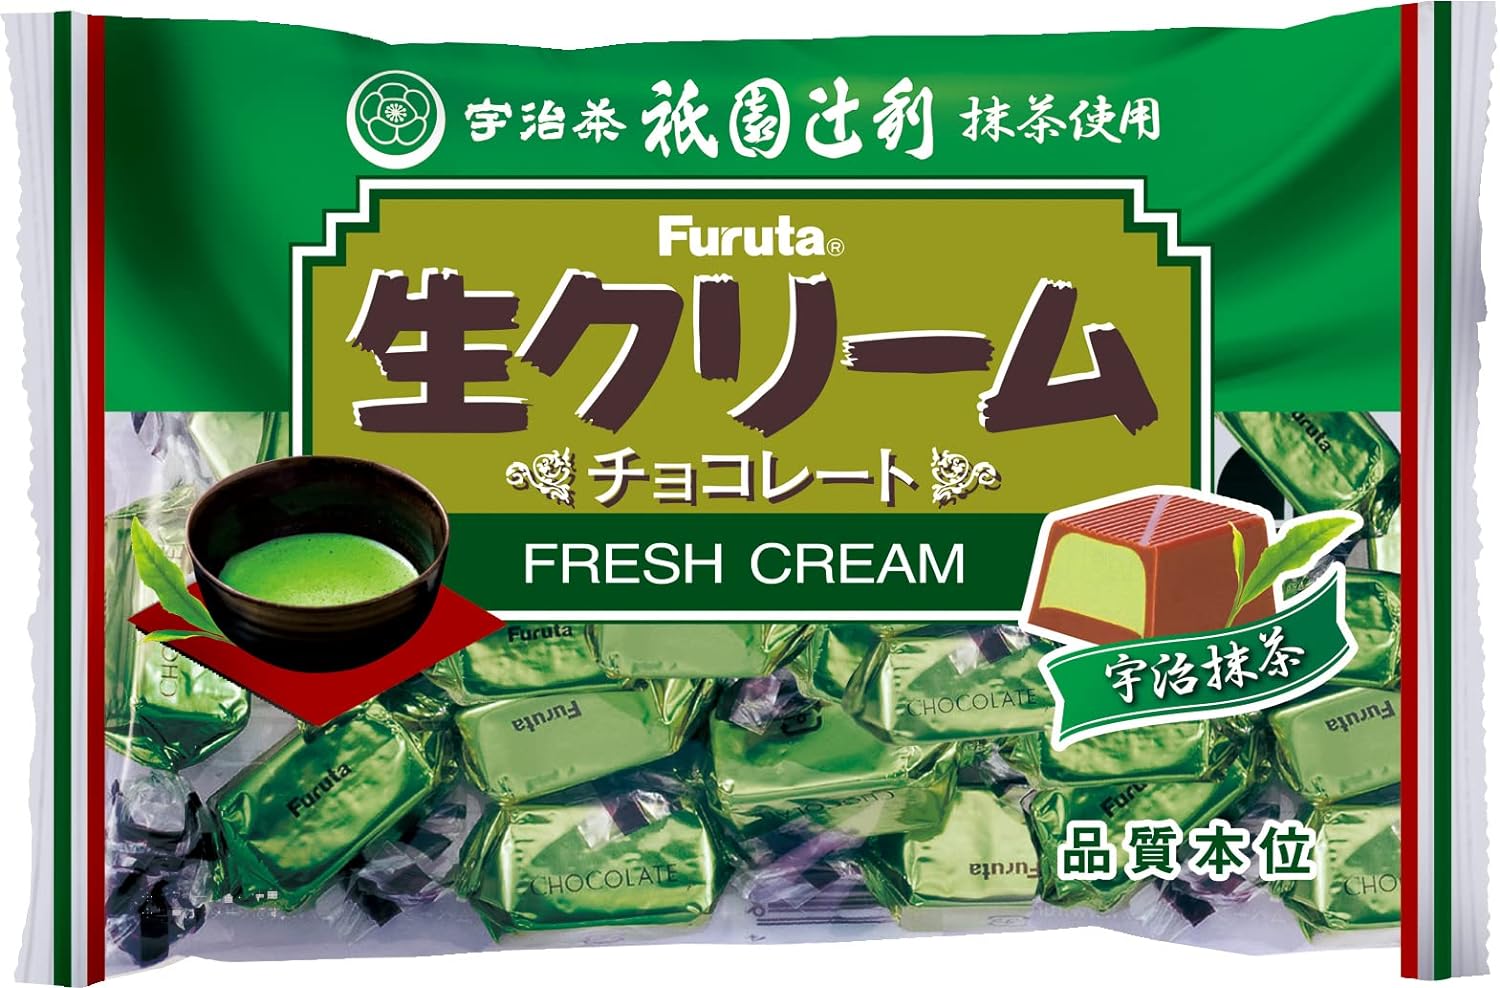 Furuta Fresh Cream Chocolate Uji Matcha (164g)